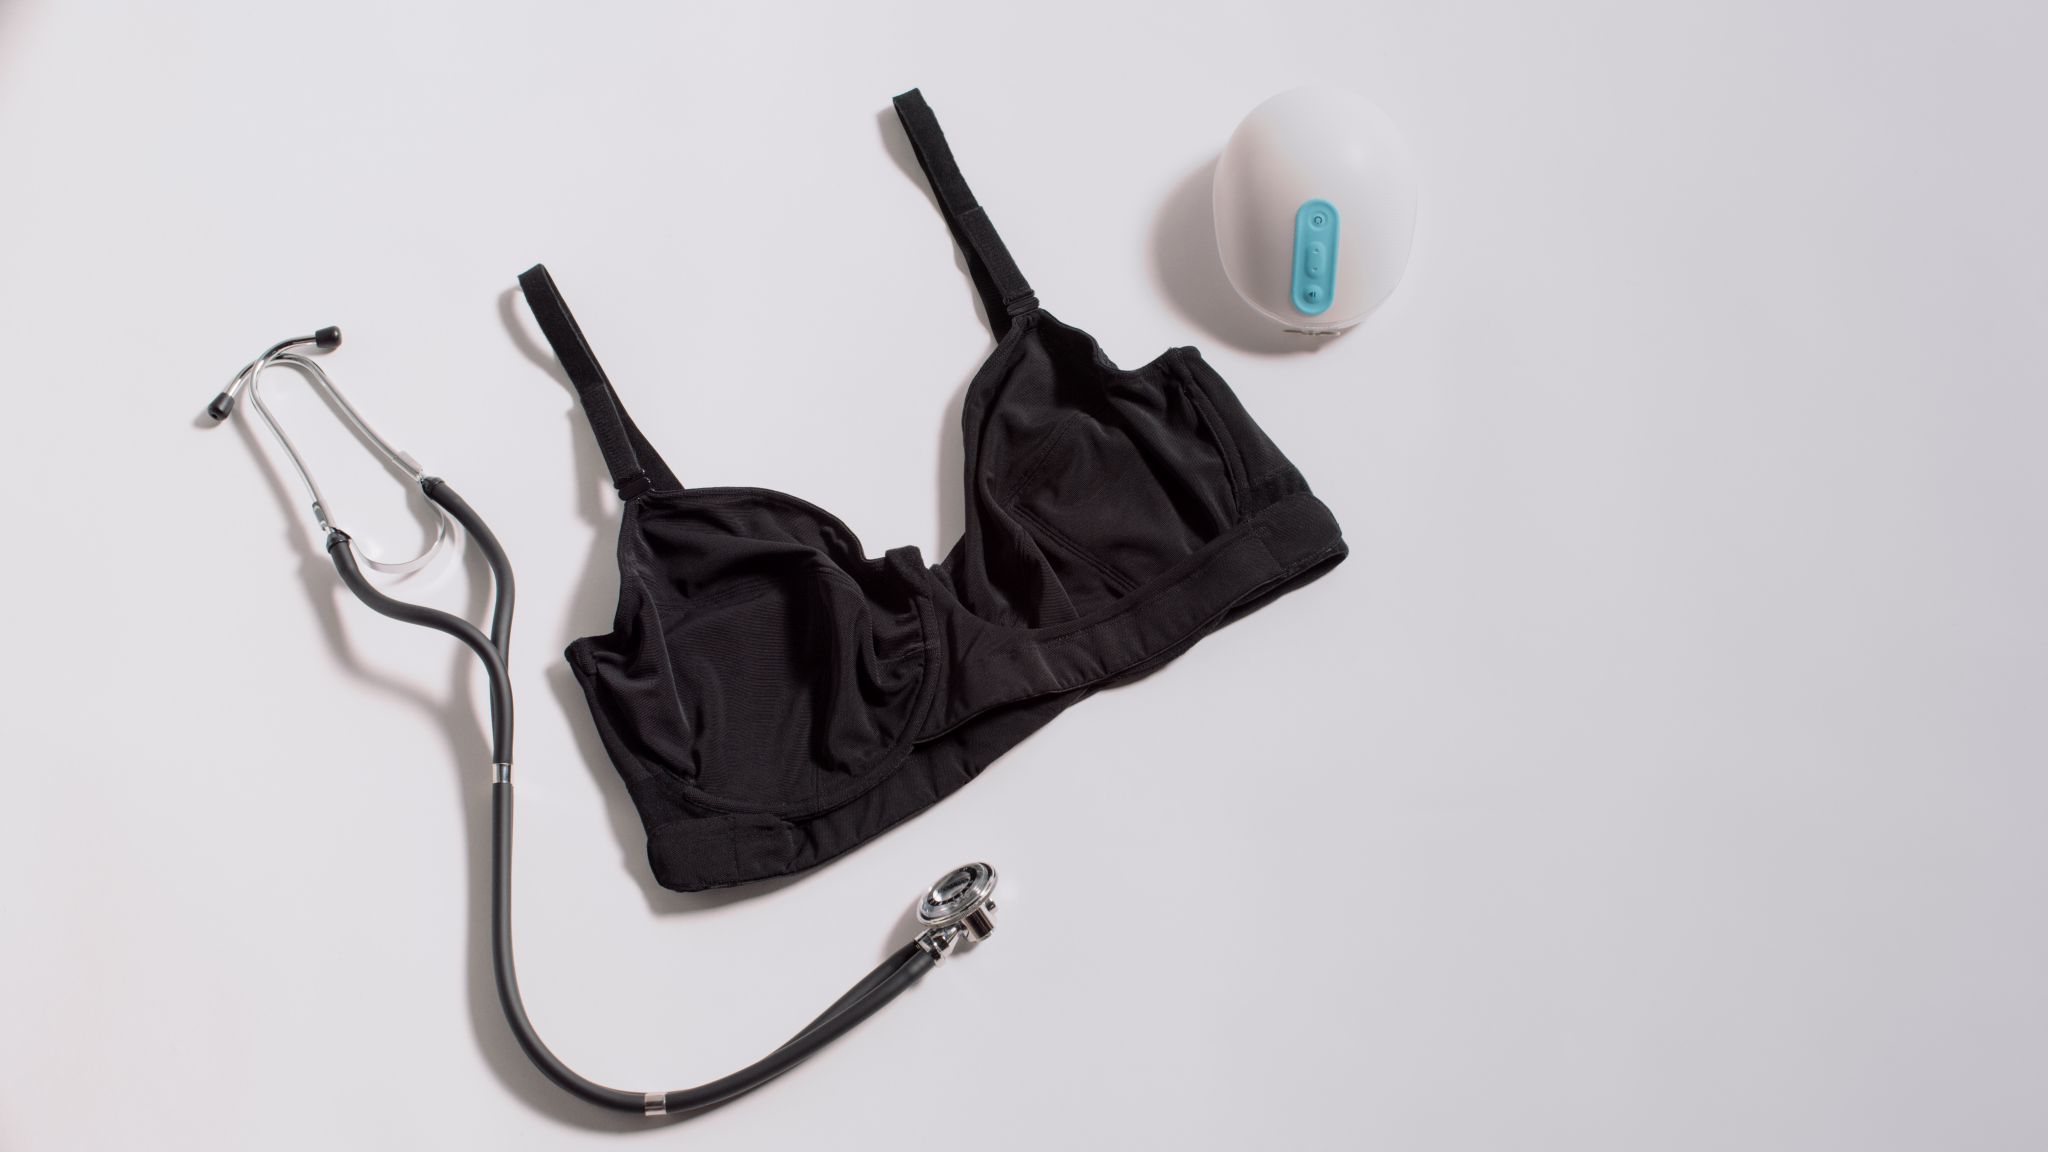 JENNAbra Product Flatlays Black bra on display with stethoscope and device